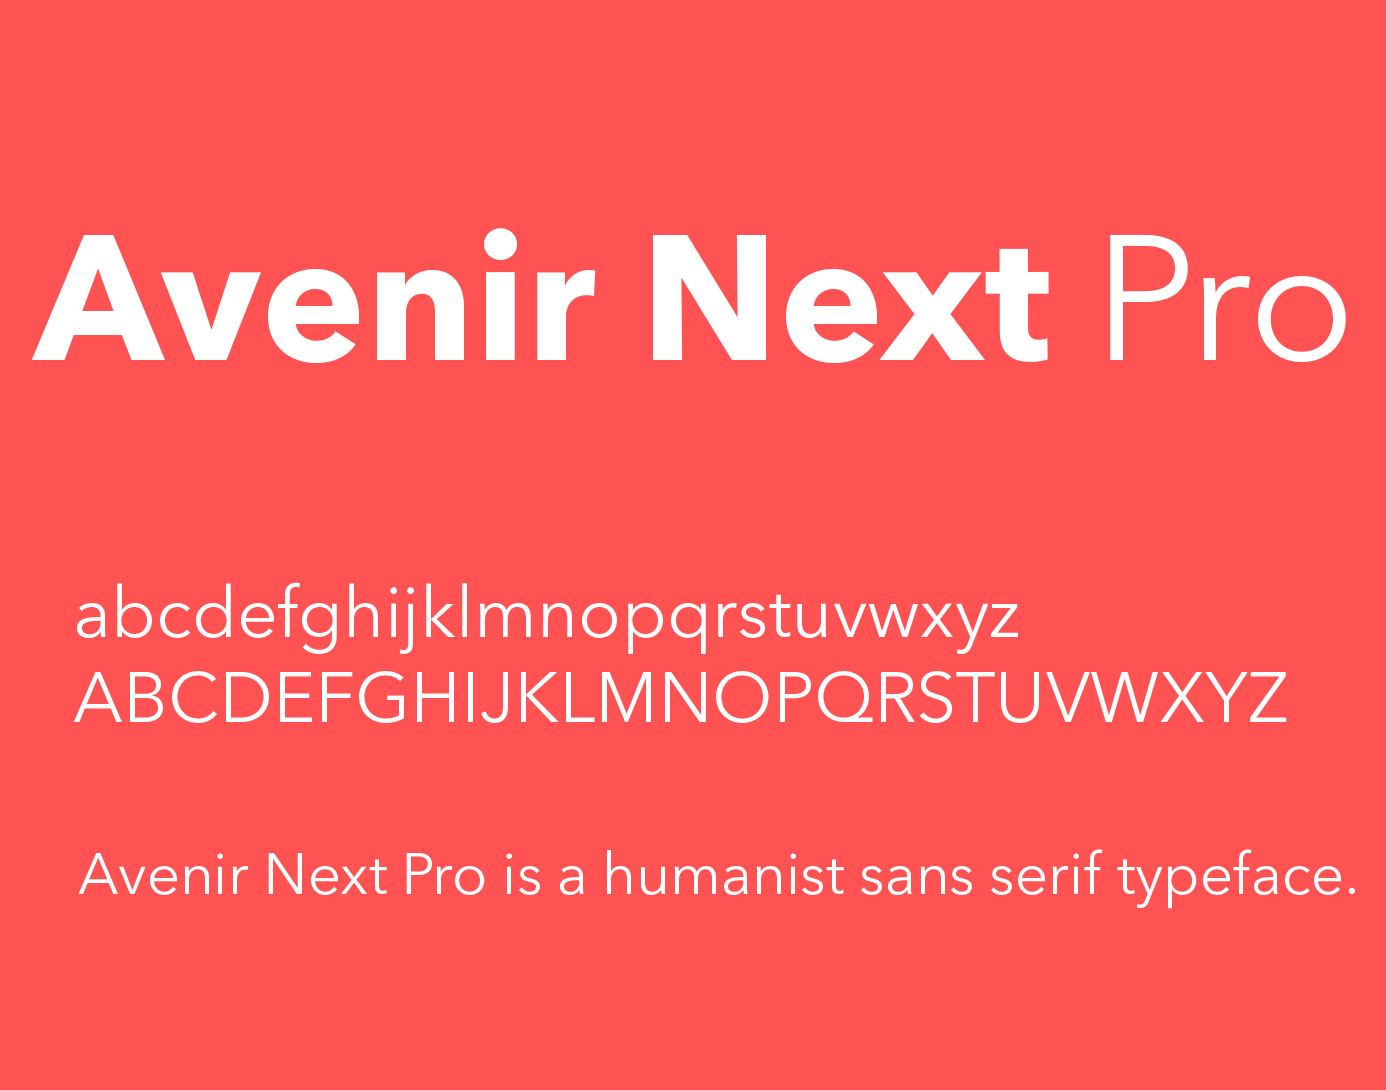 Avenir Font Free Download Mac